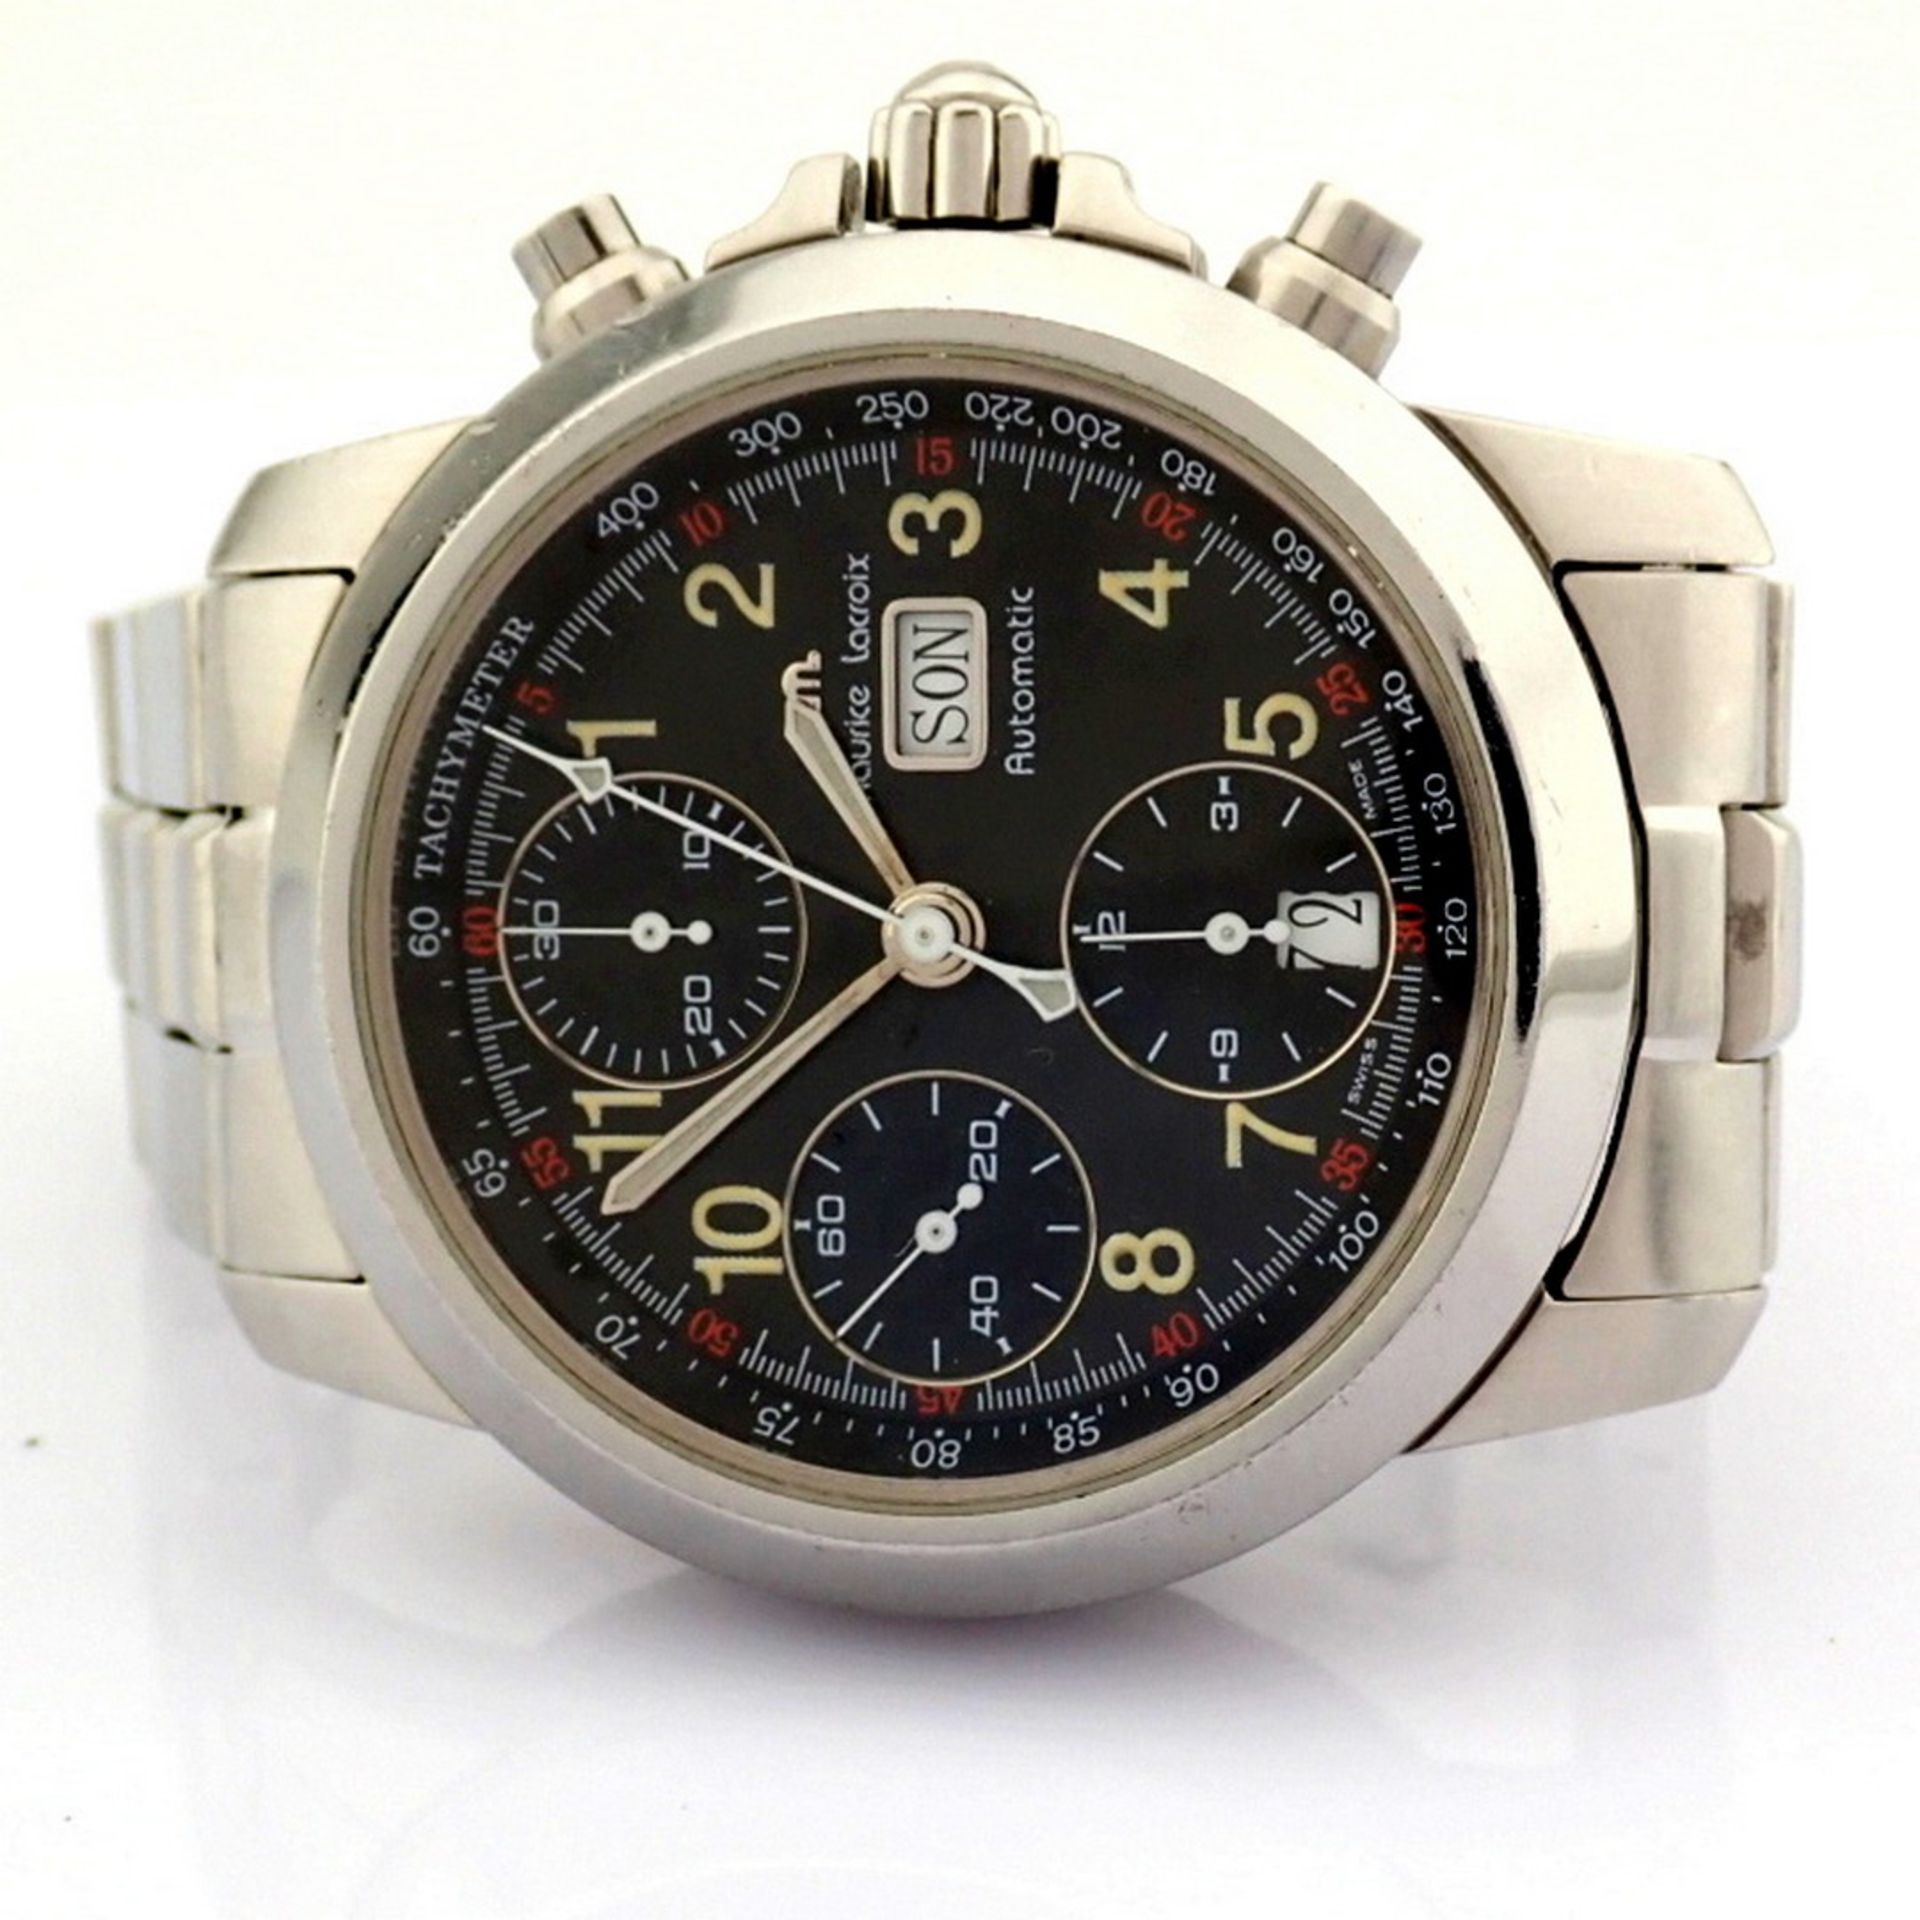 Maurice Lacroix / 39721 Automatic Chronograph - Gentlmen's Steel Wrist Watch - Image 6 of 19